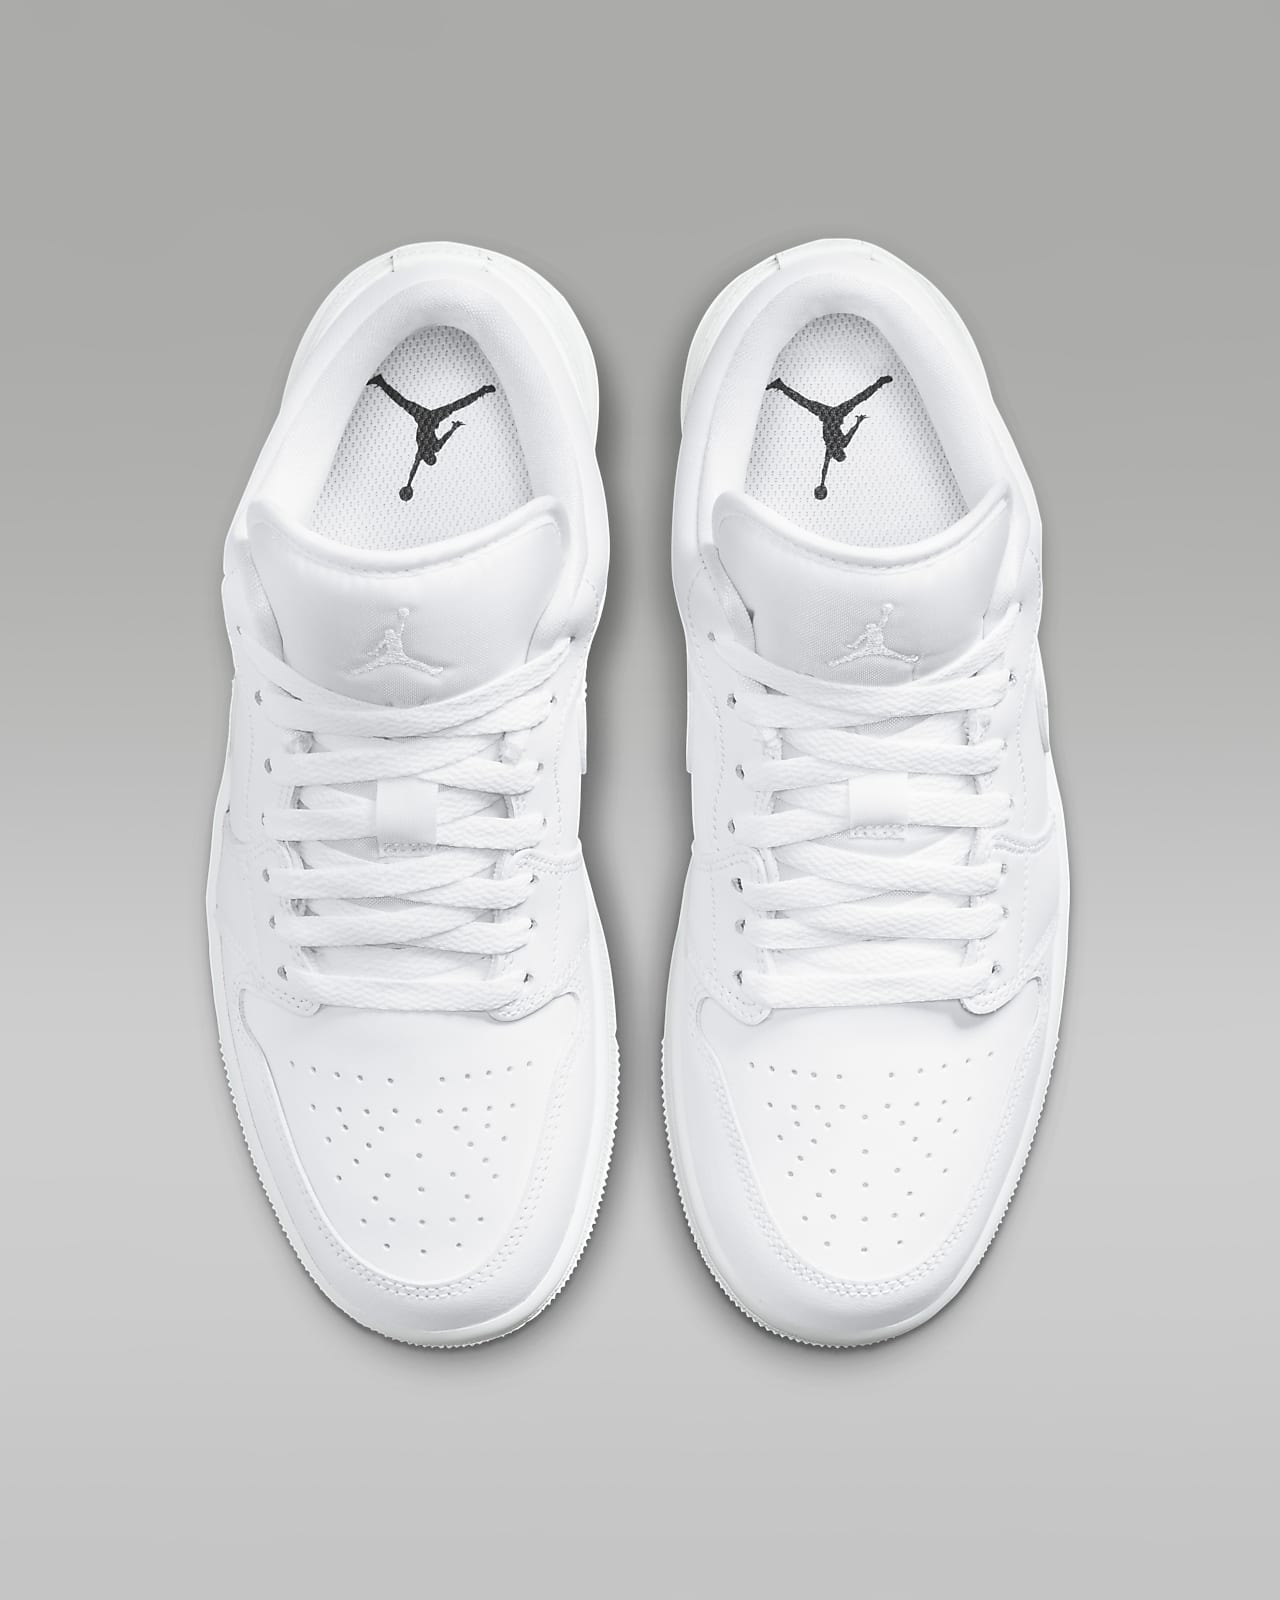 SNEAKER CONCEPTS: Air Jordan 4 x Off-White “Artic” 🥶❄️ | Instagram